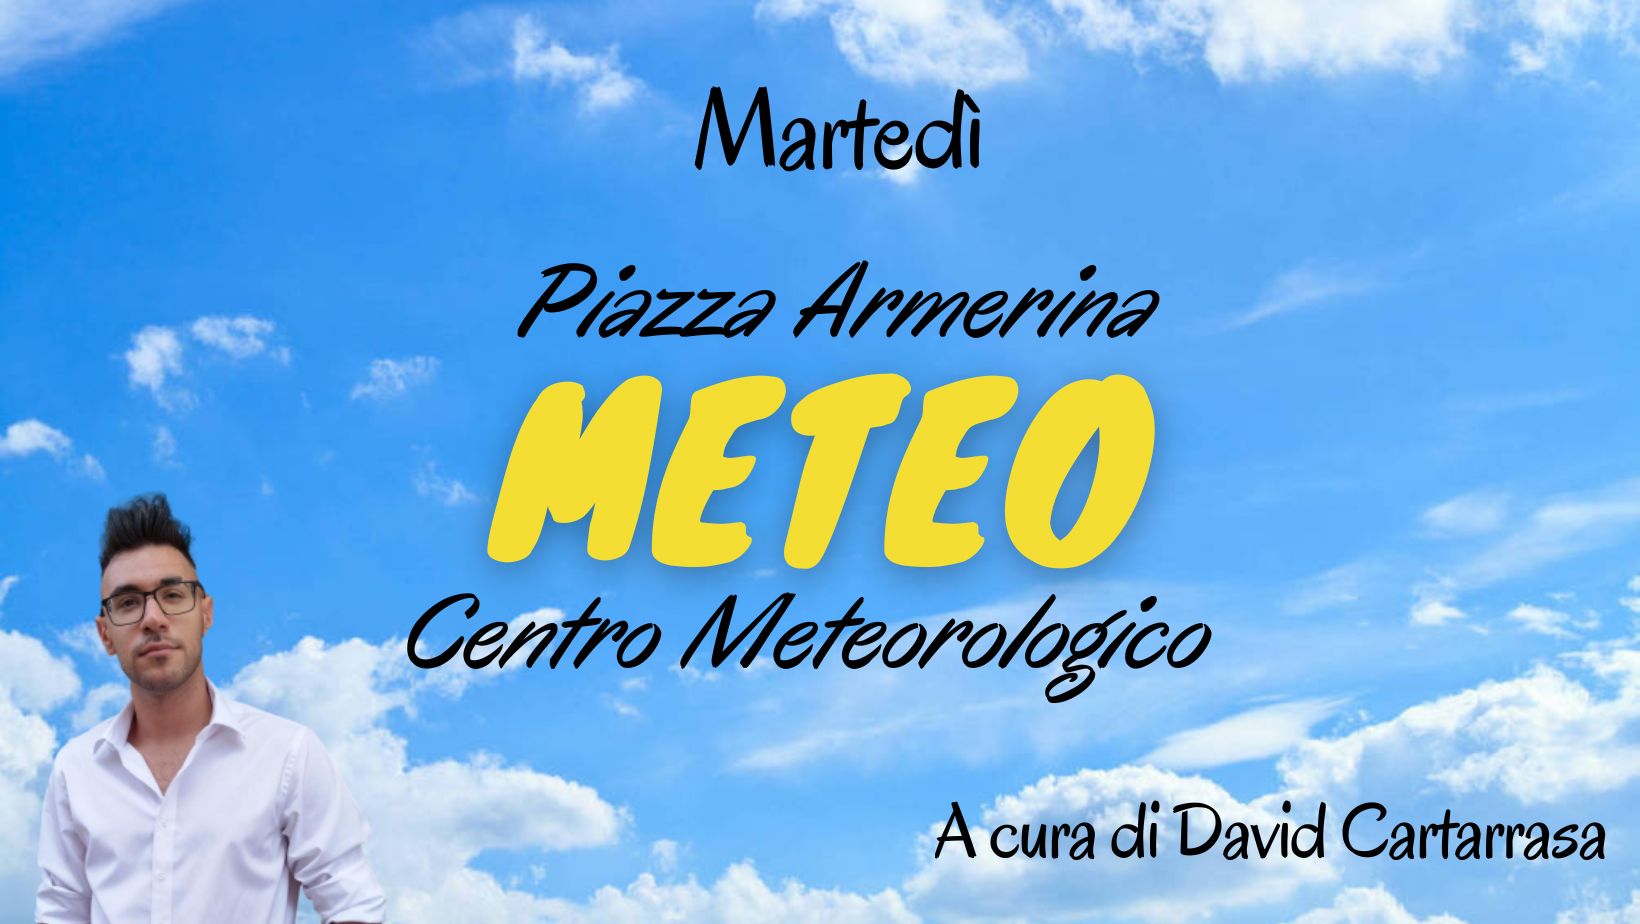 Meteo Piazza Armerina : martedì 7 febbraio